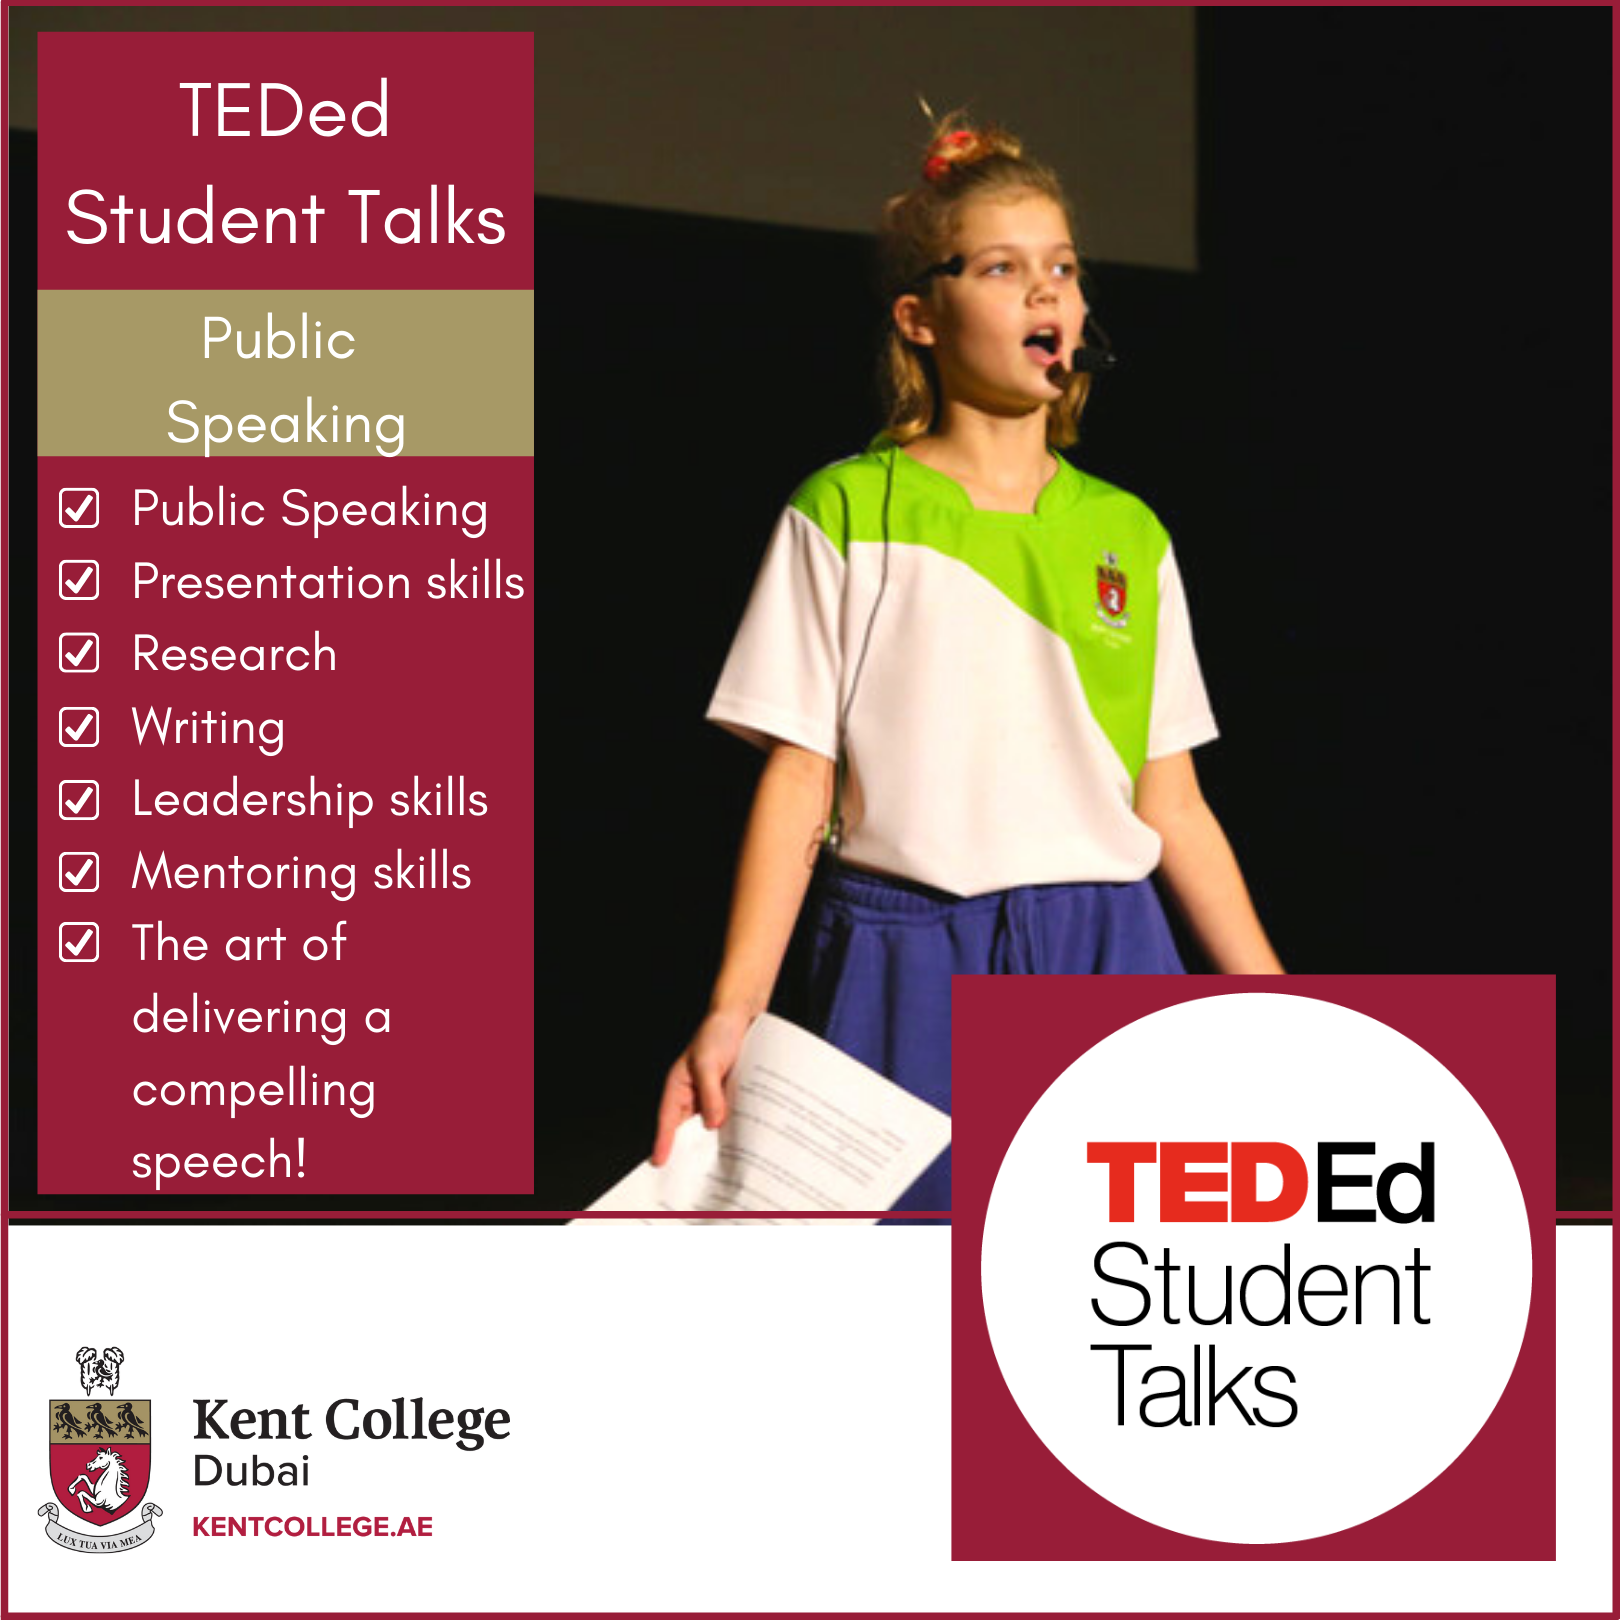 Top British School in Dubai offers TEDed Student Talks